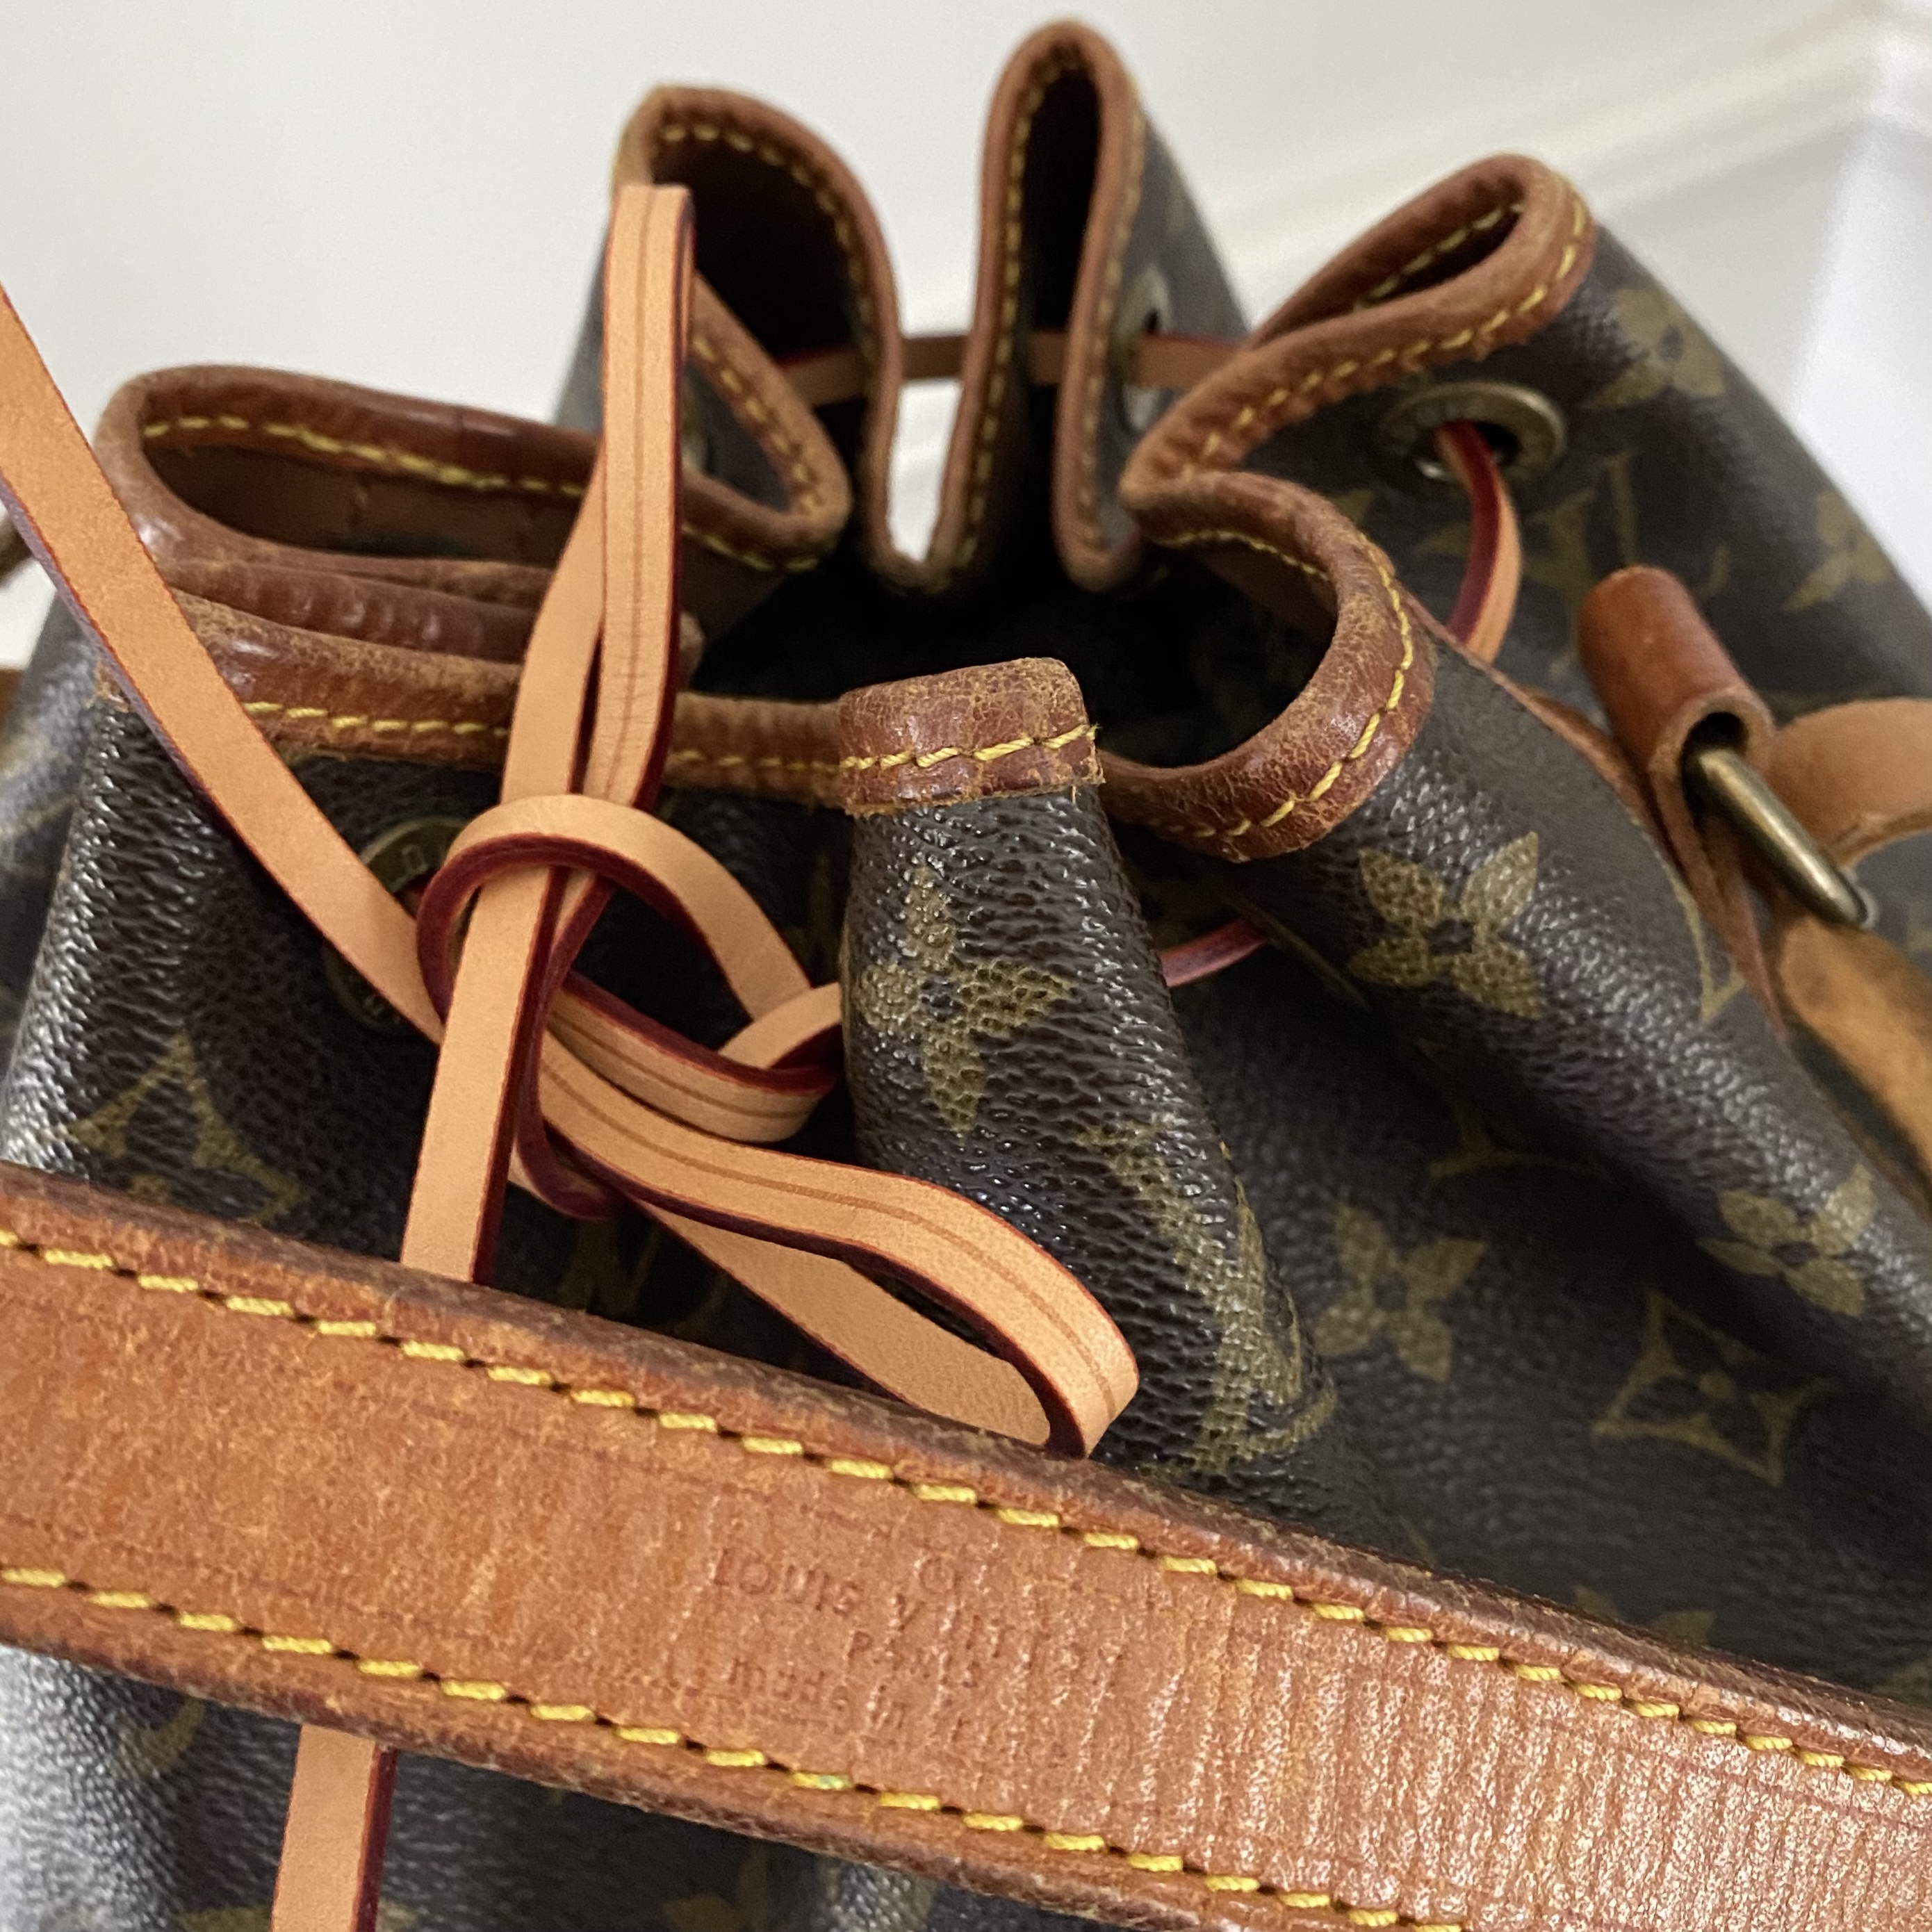 Cheapest Louis Vuitton bags in 2022 • Petite in Paris